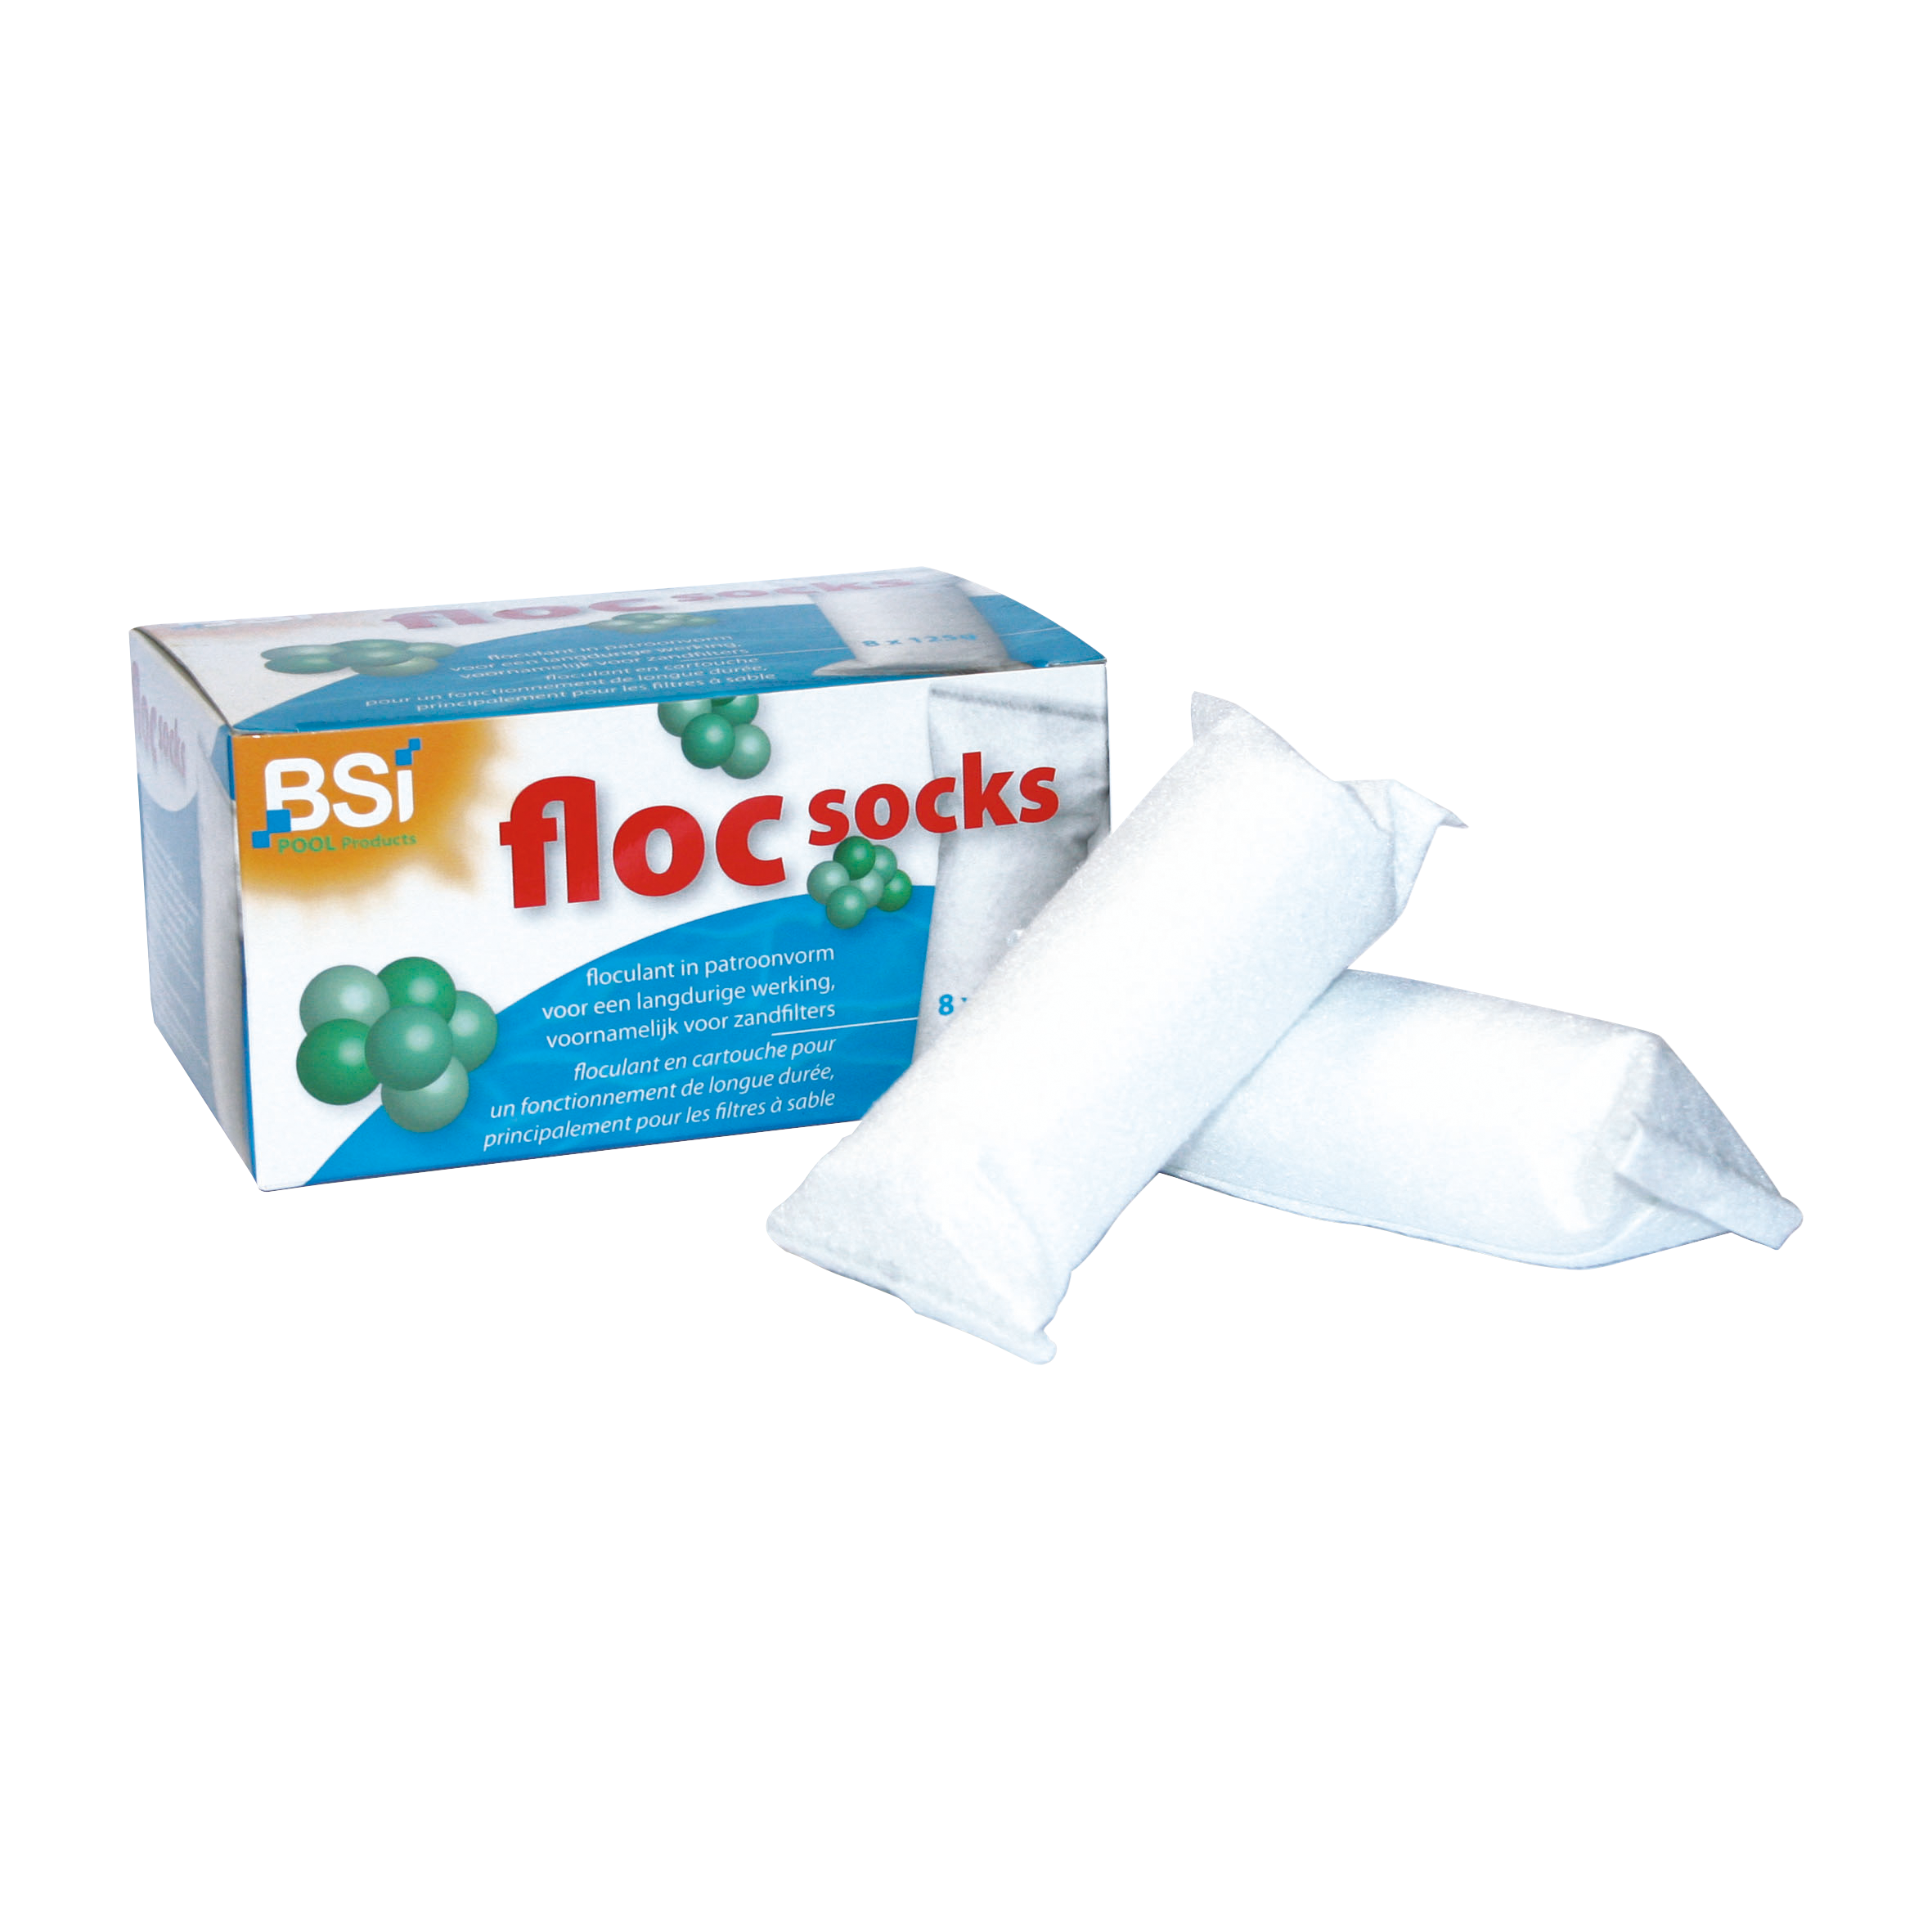 Floc socks 8 * 125g image